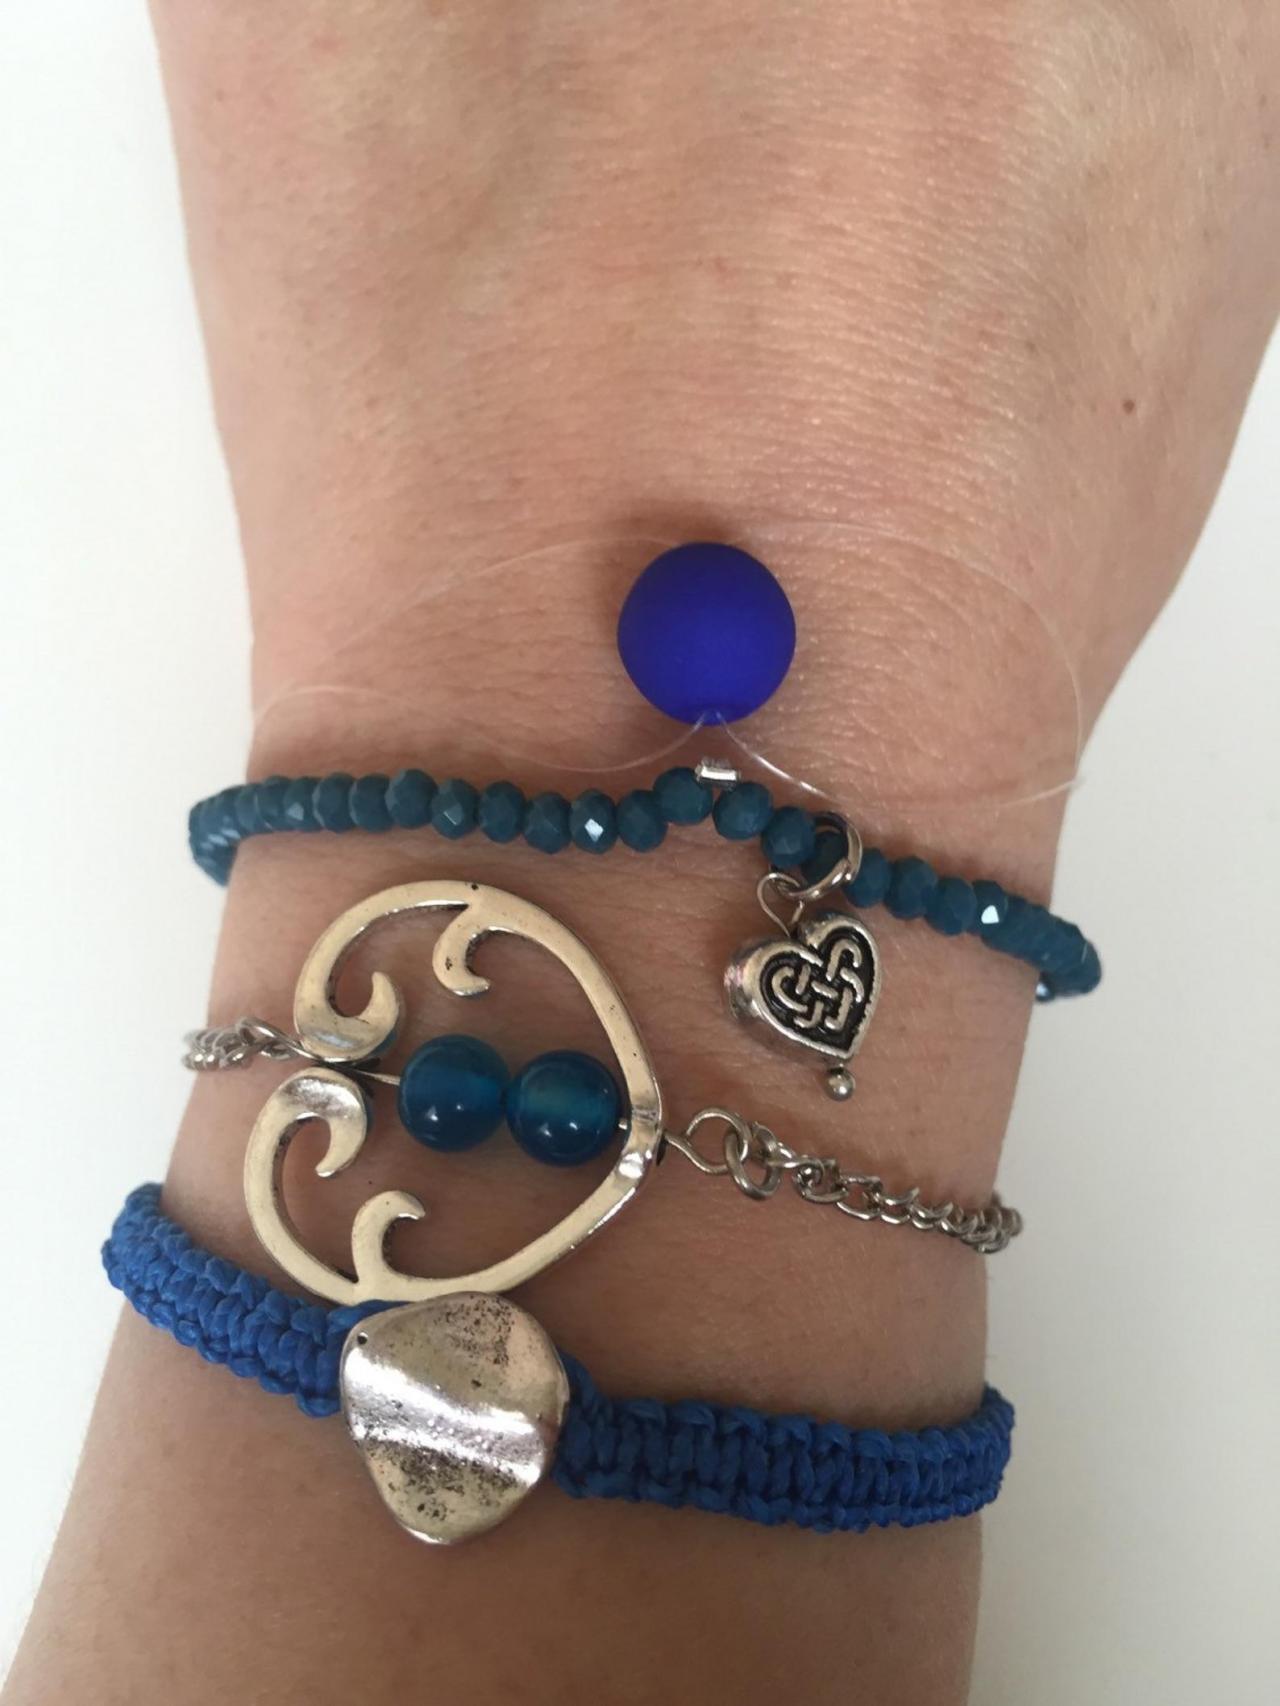 Pack Bracelet 303 -blue faith friendship heart sign macrame beads alloy silver metal chain